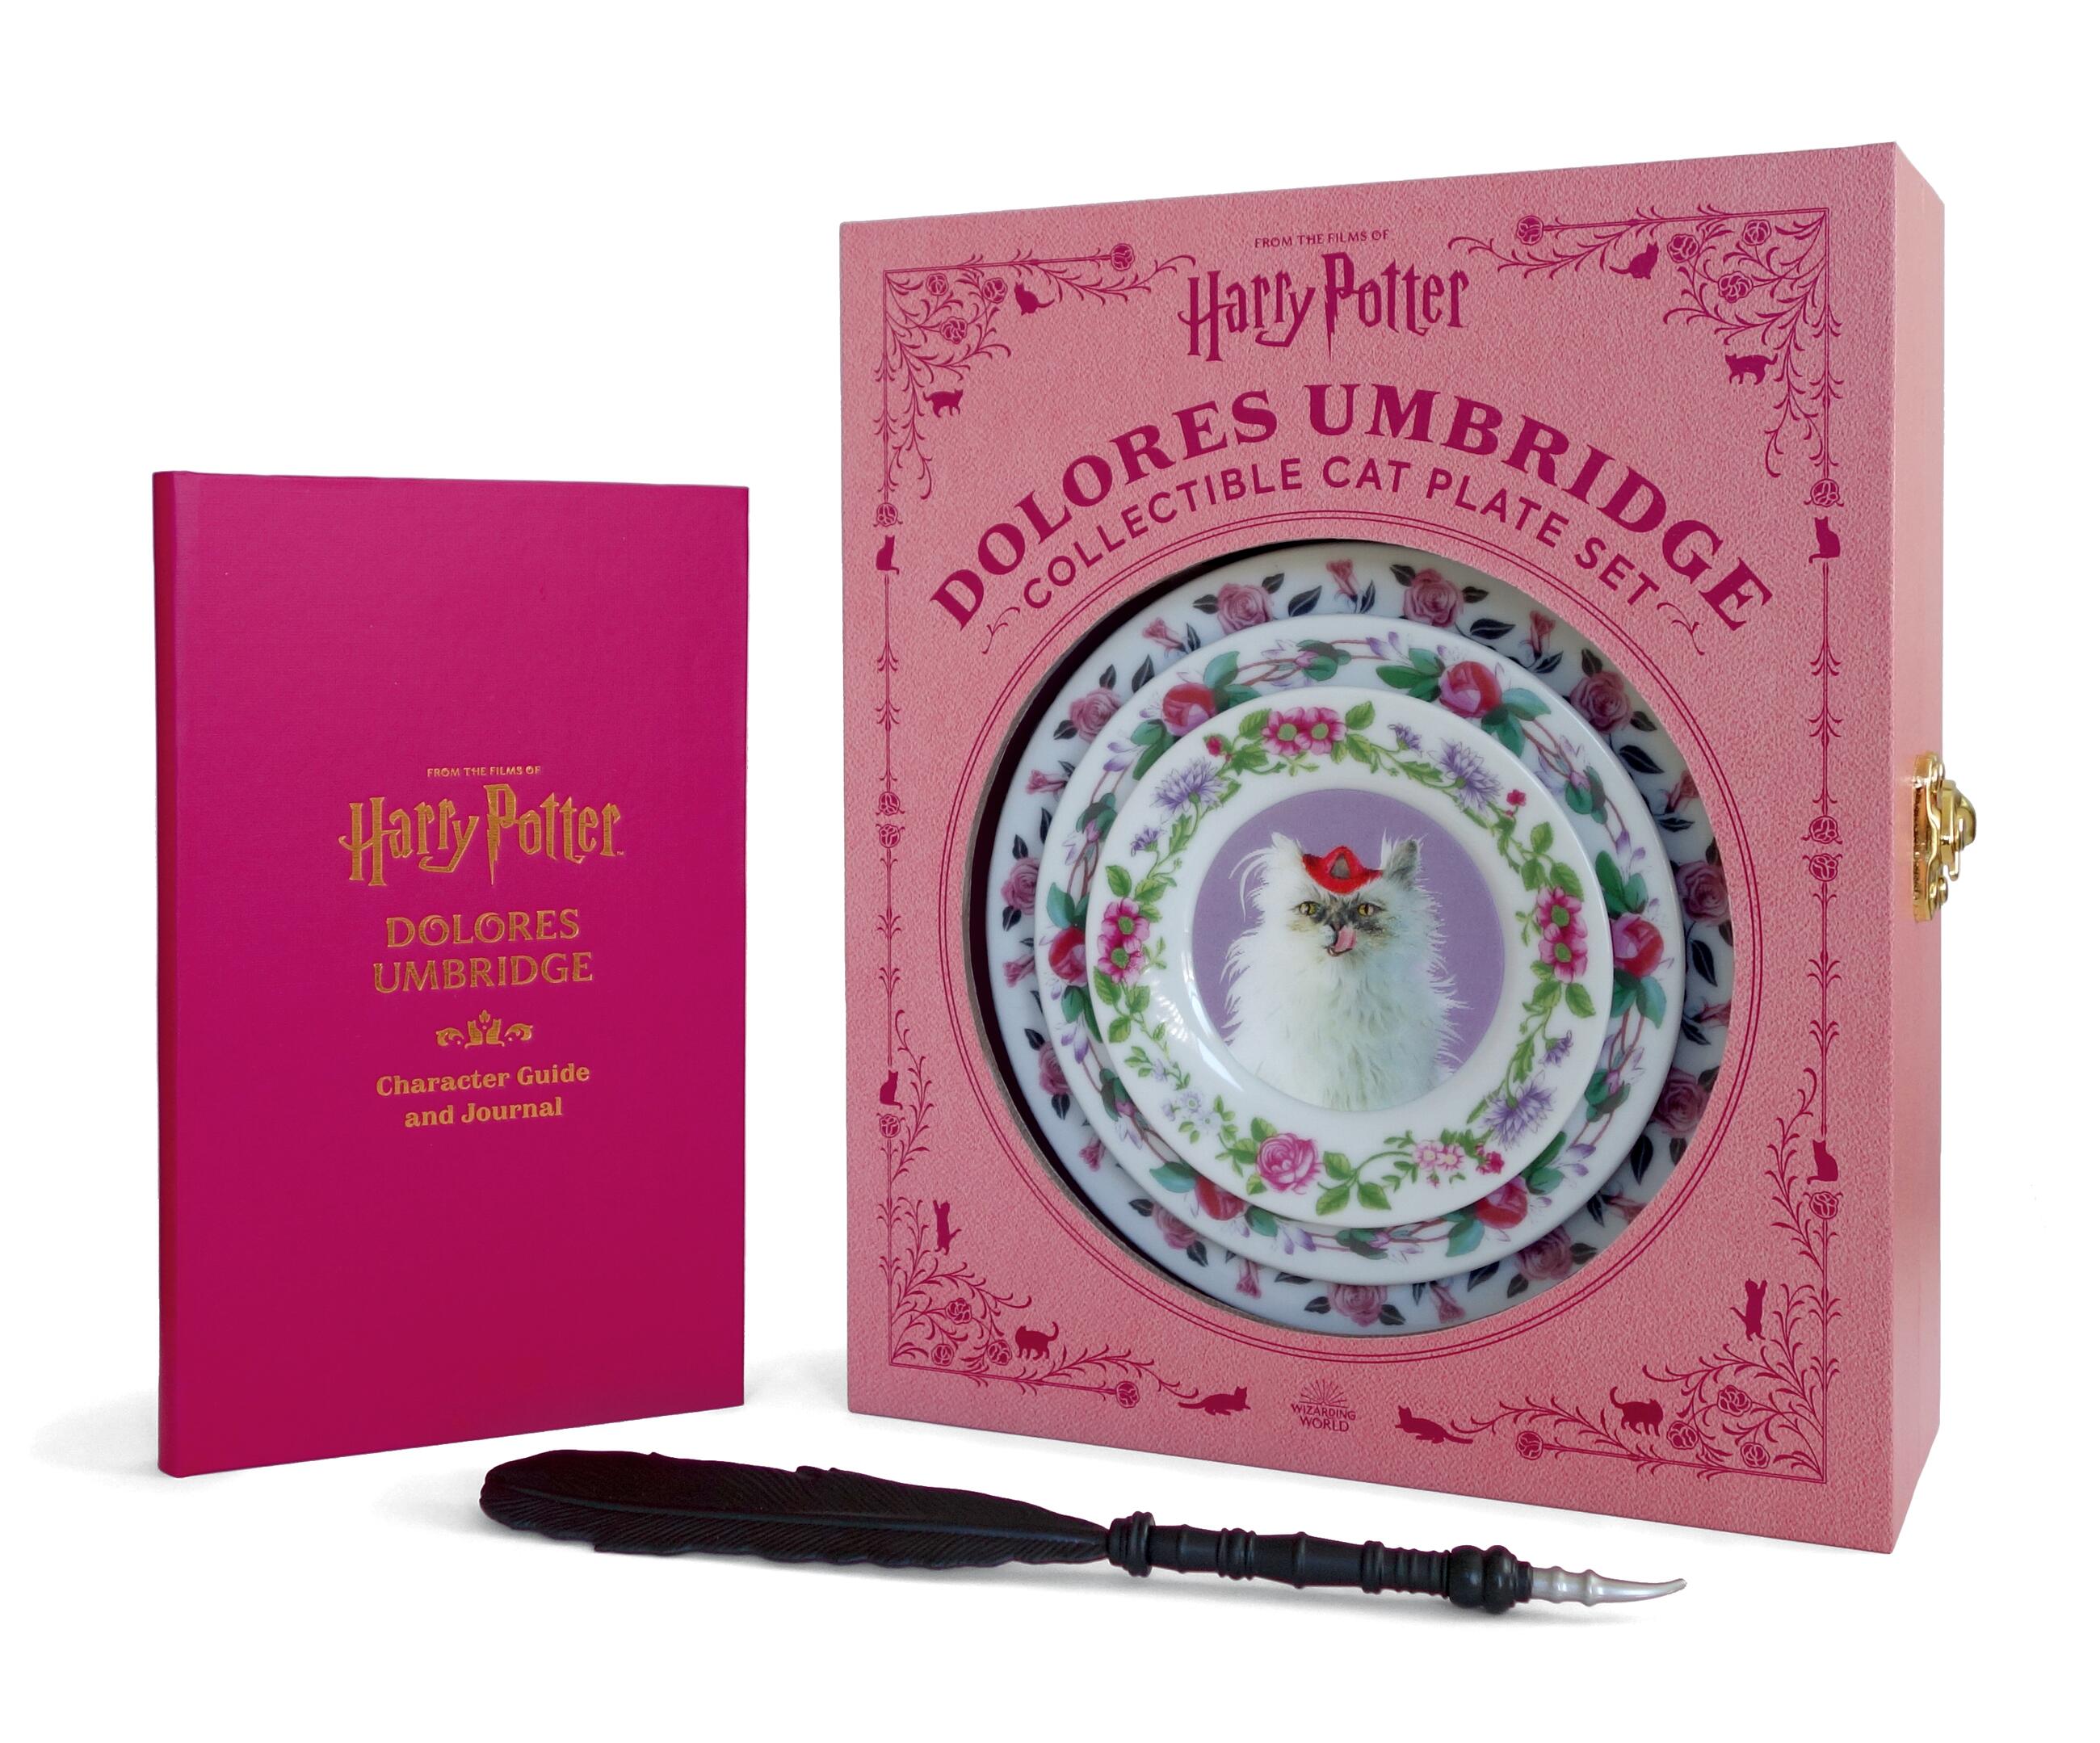 Harry Potter: Dolores Umbridge Collectible Cat Plate Set by Donald